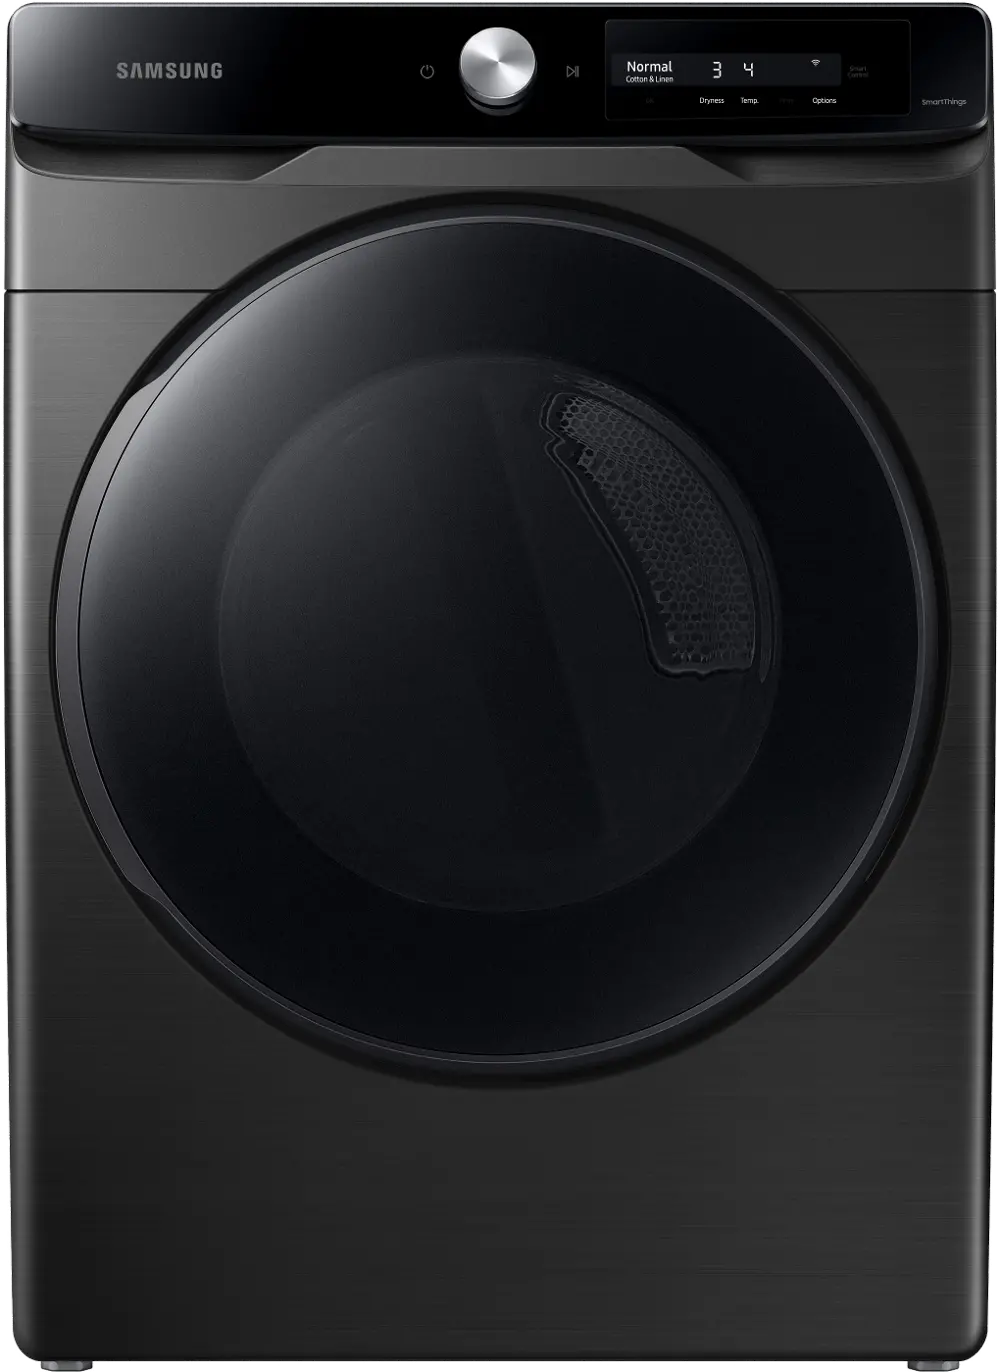 DVE45A6400V Samsung Electric Dryer - Black, 45A6400-1